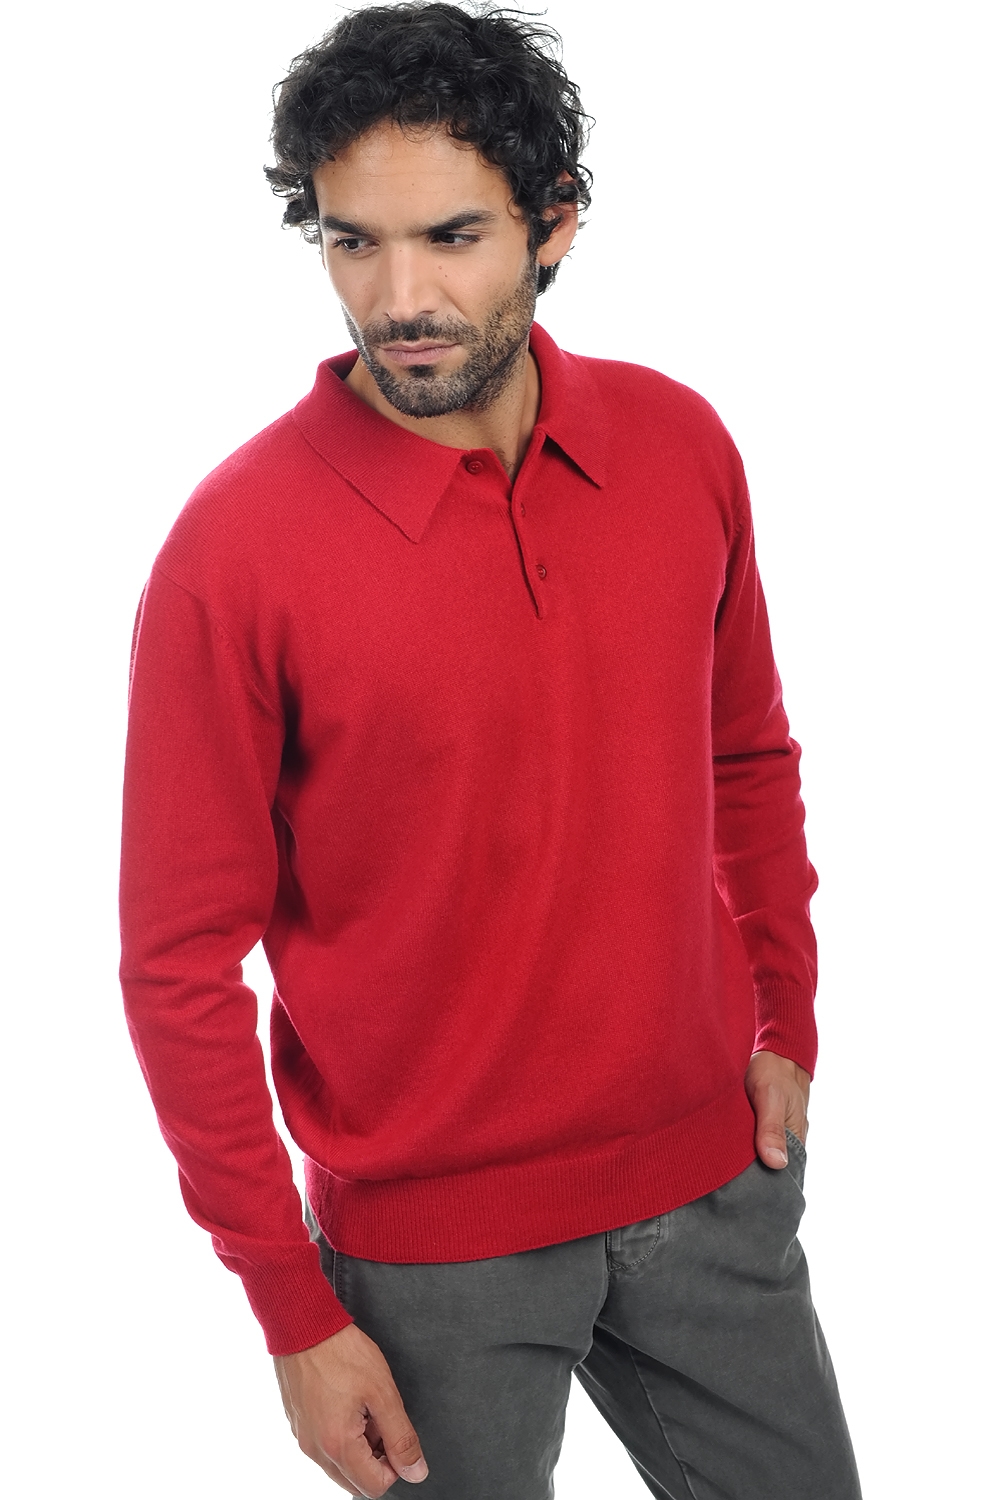 Cachemire pull homme alexandre rouge velours 4xl